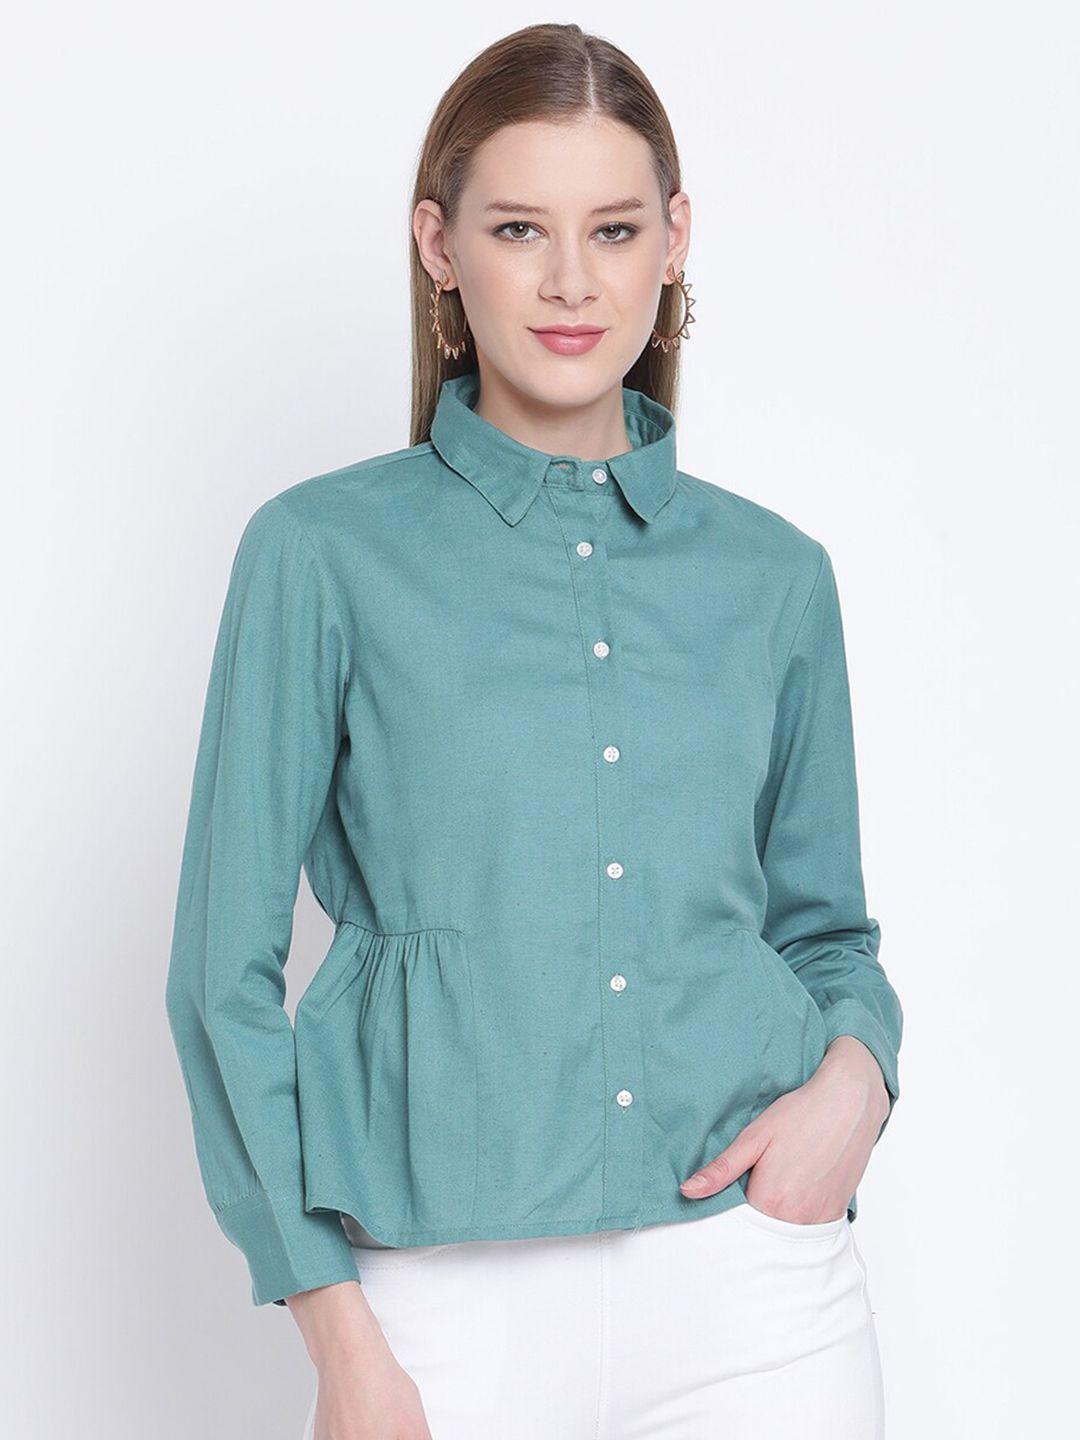 vanca eco green shirt style top